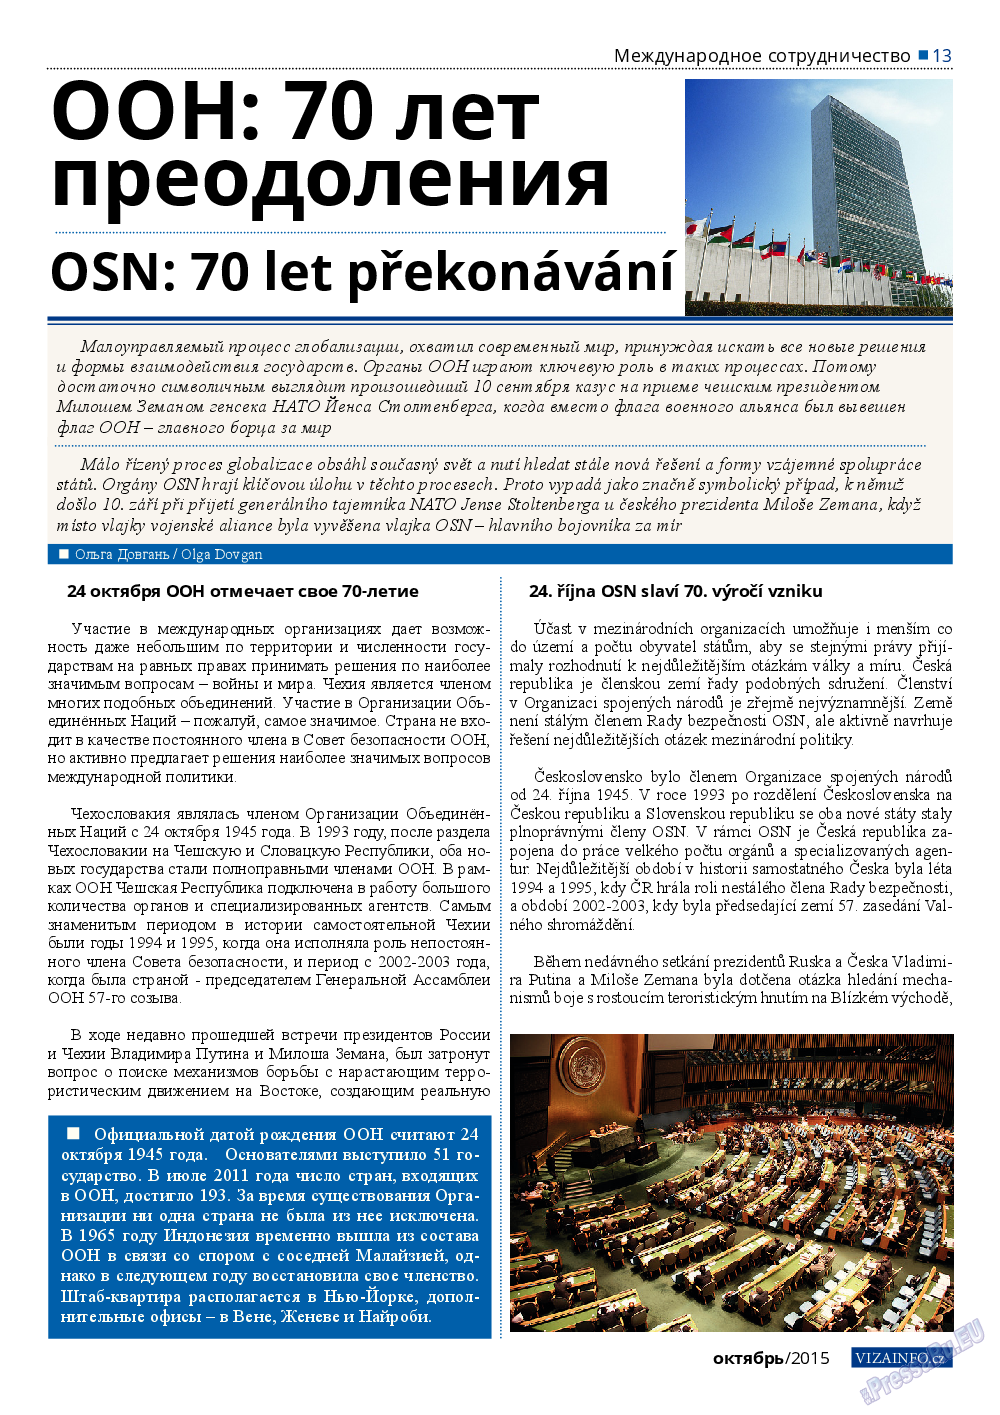 Vizainfo.cz (газета). 2015 год, номер 73, стр. 13